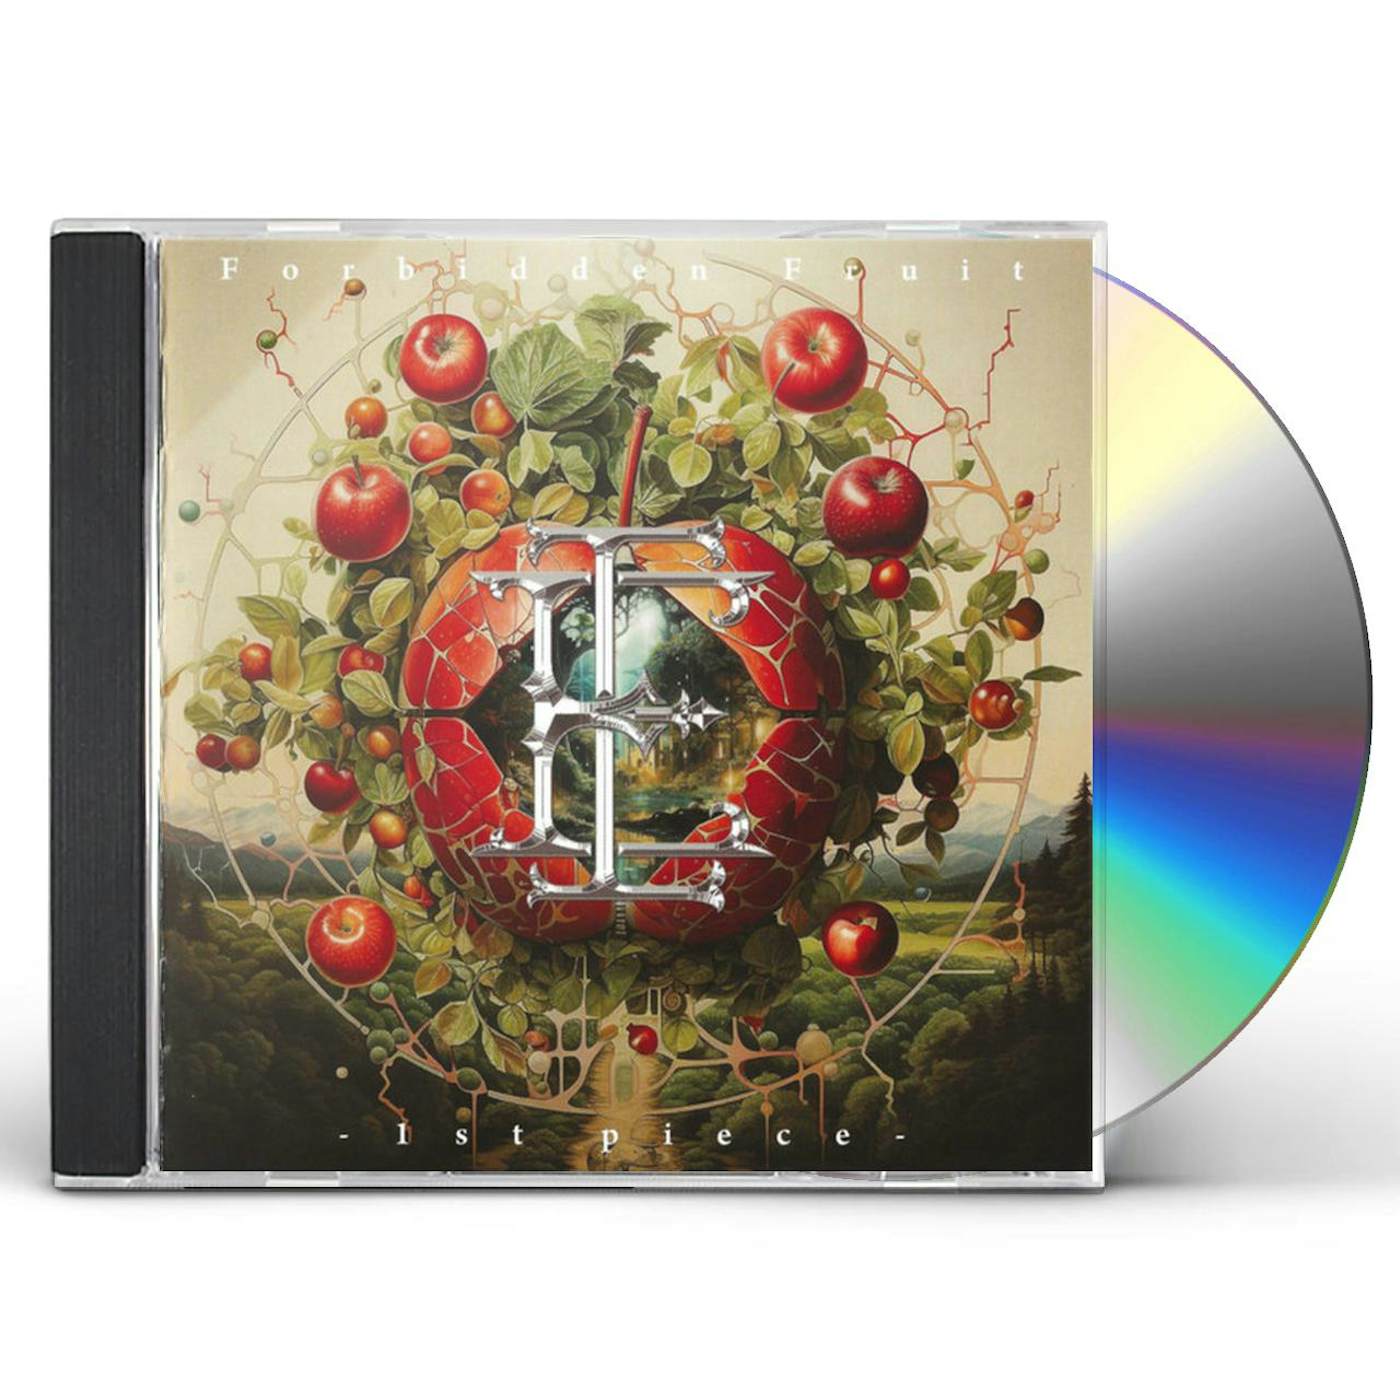 East Of Eden FORBIDDEN FRUIT – 1ST PIECE CD